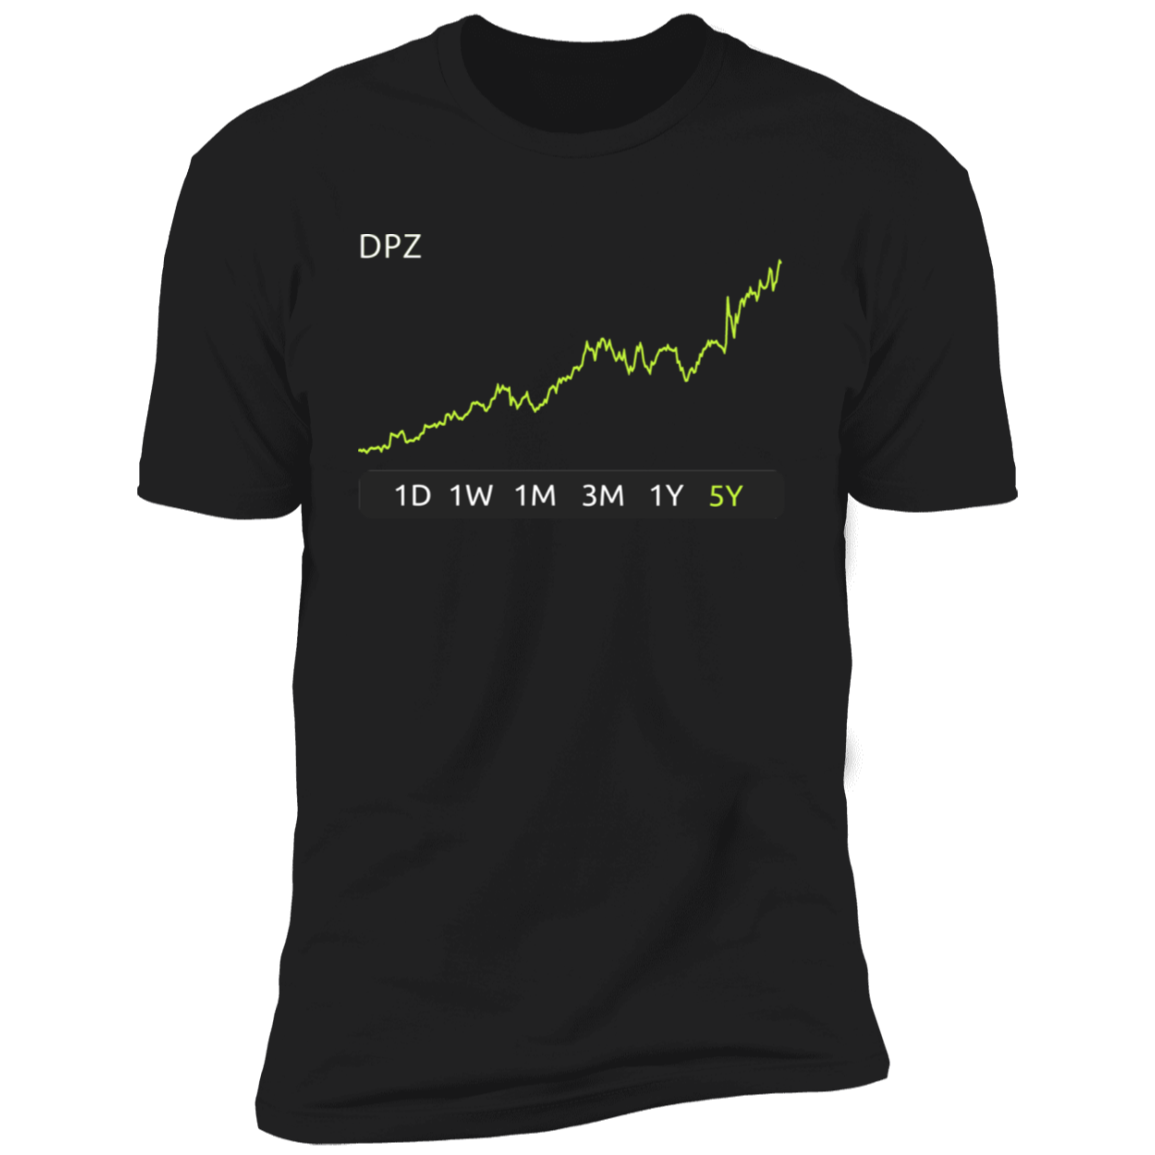 DPZ Stock 5y Premium T-Shirt